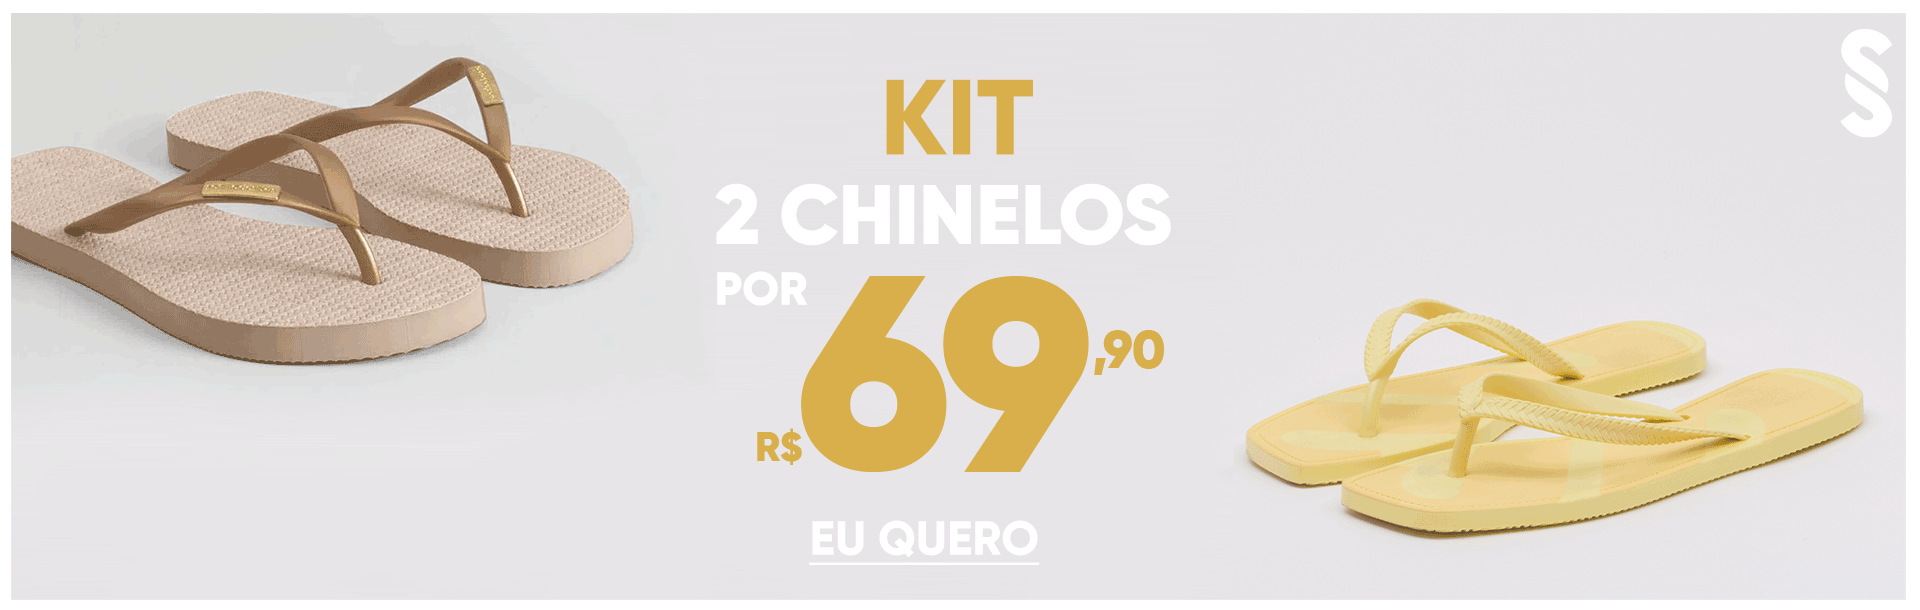 Kit - 2 chinelos por R$69,90*